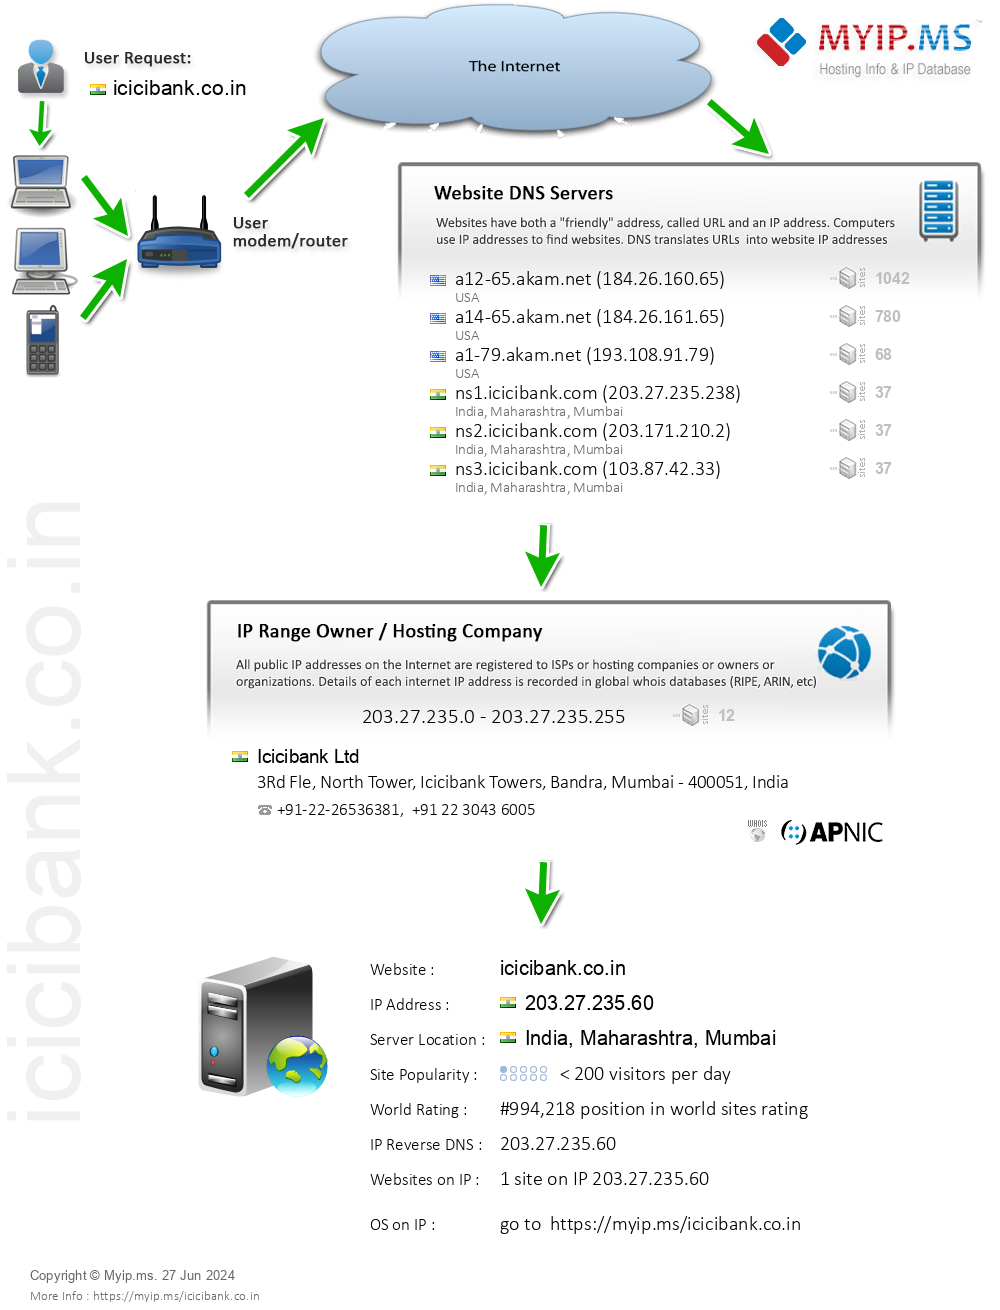 Icicibank.co.in - Website Hosting Visual IP Diagram